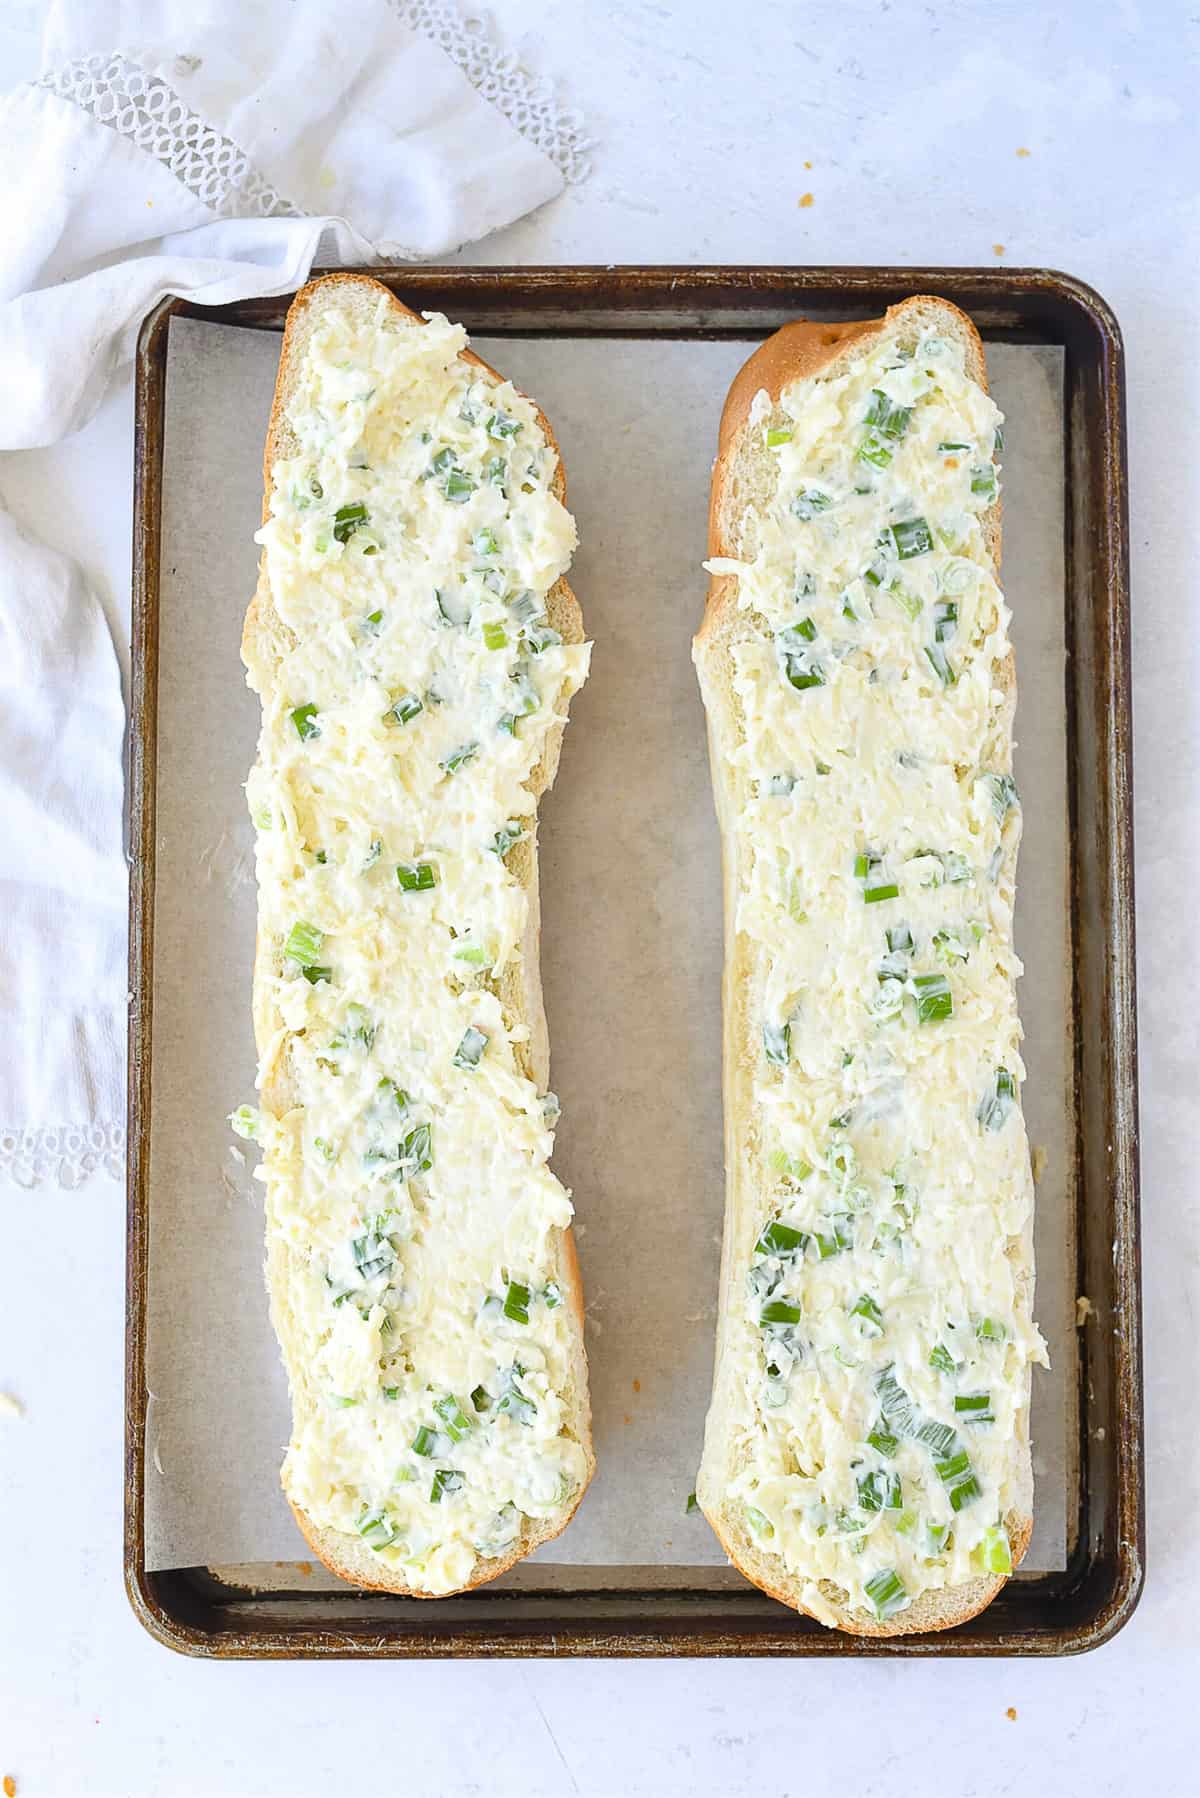 garlic butter spread on bread